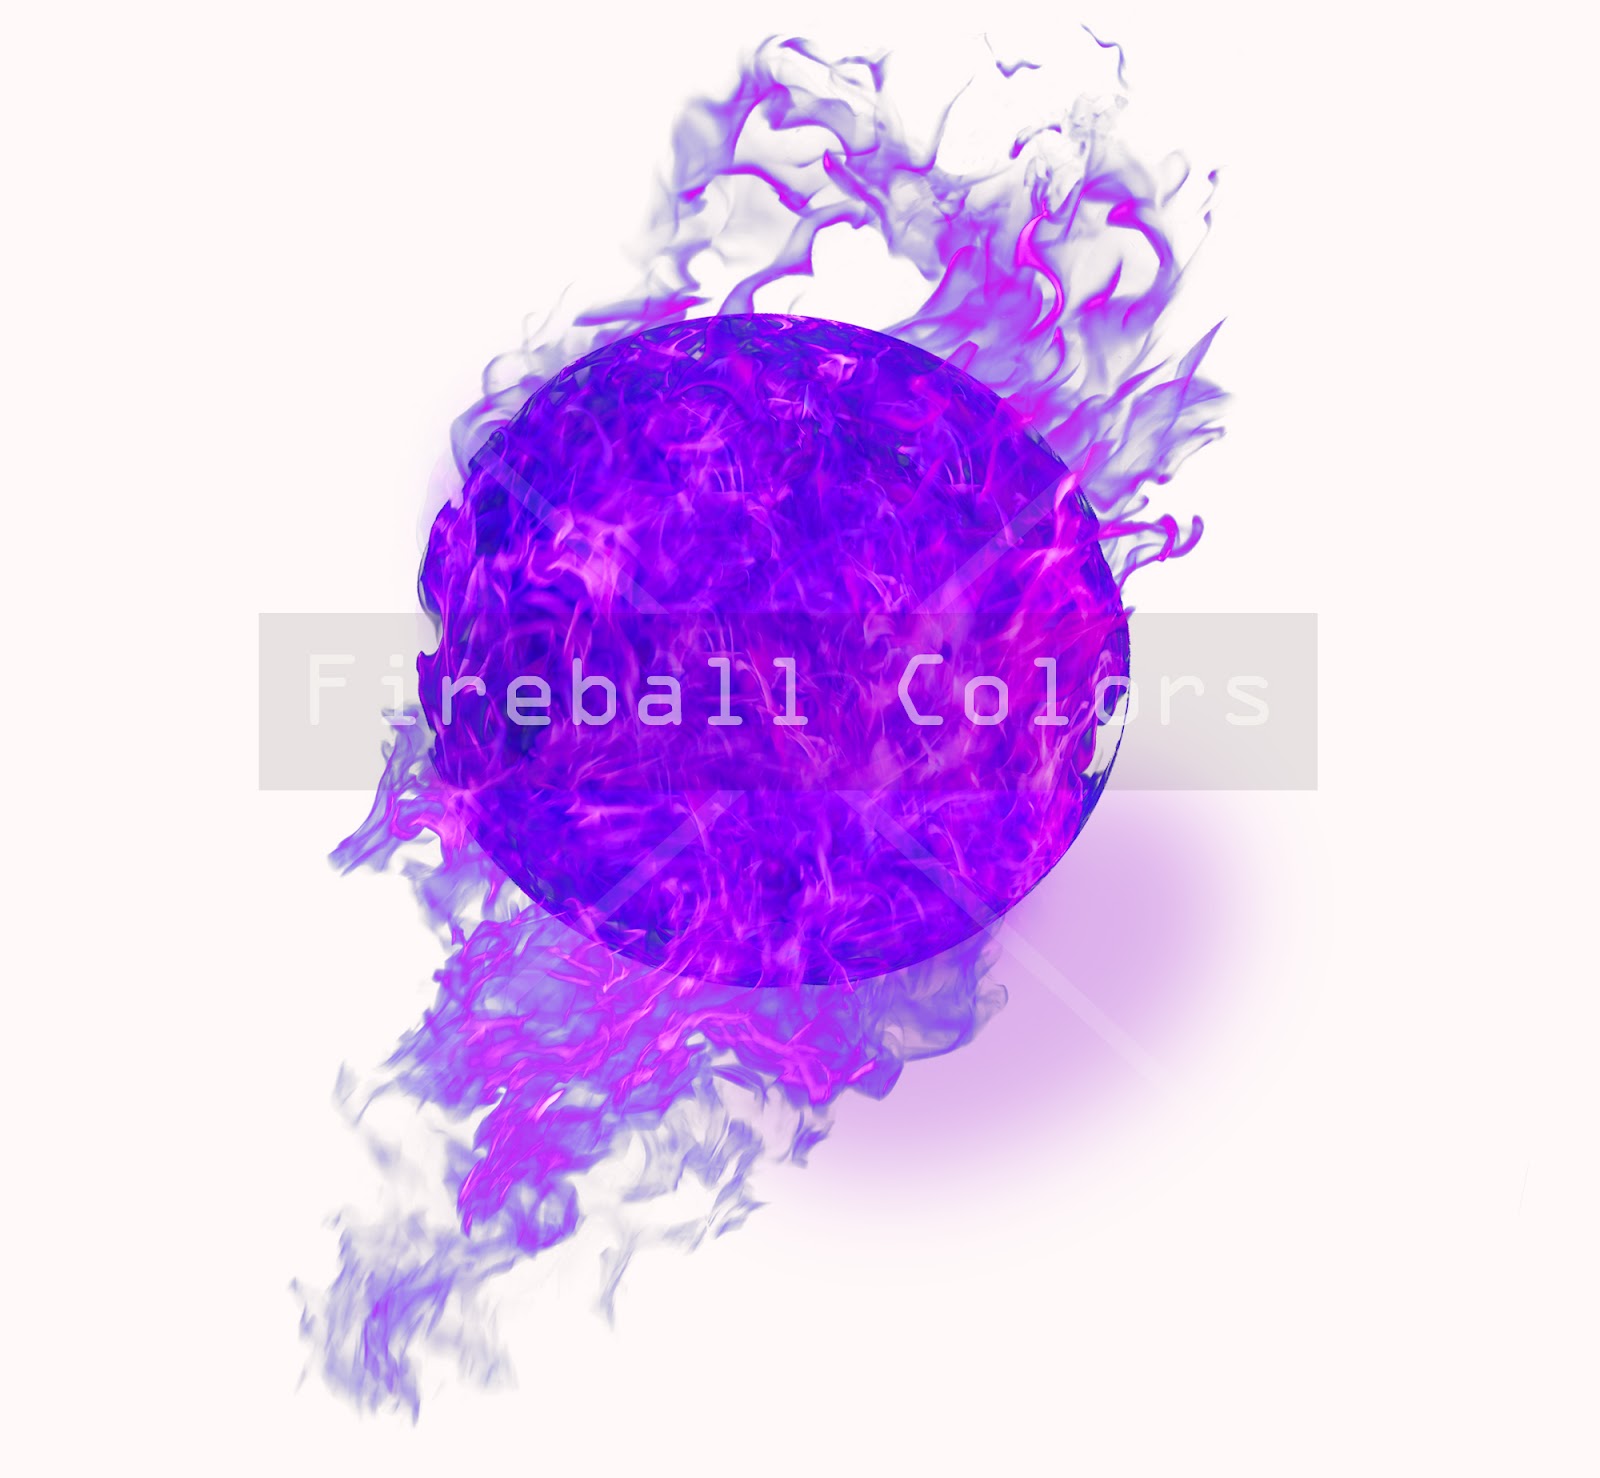 Fireball Colors: Fireball Colors Vector